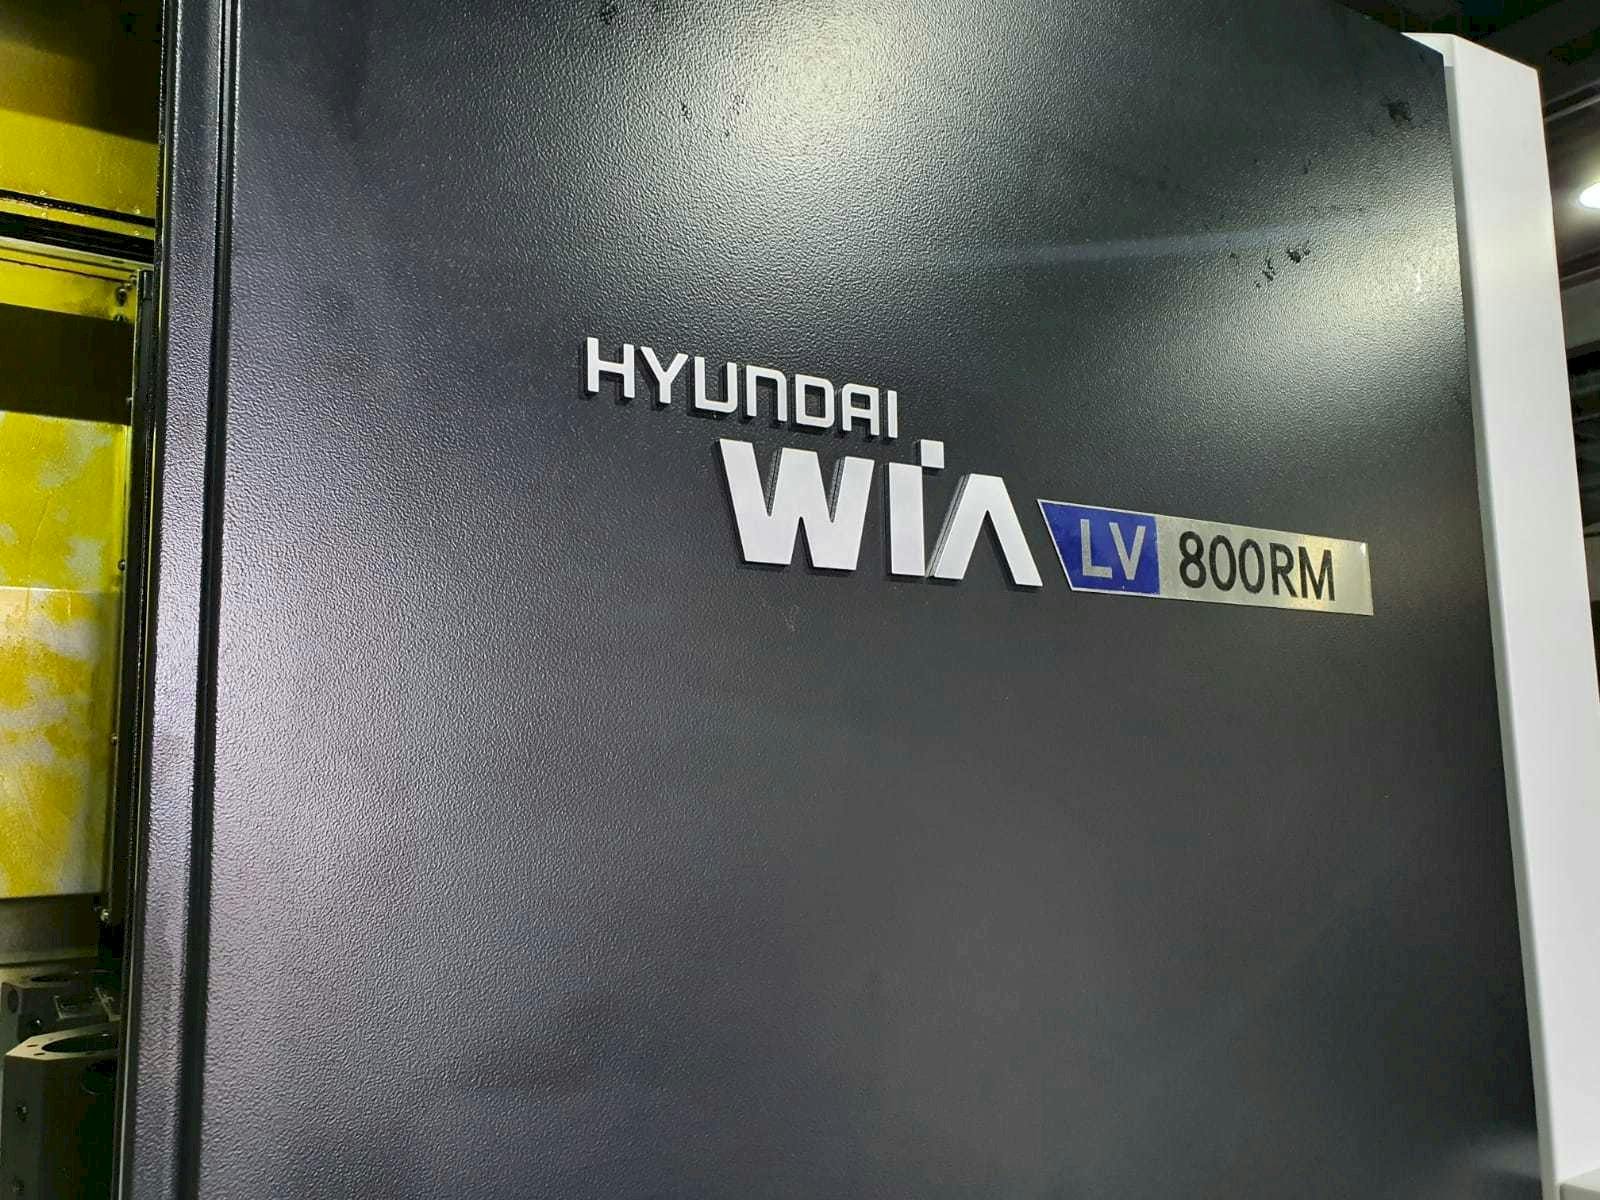 Vooraanzicht  van Hyundai Wia LV800RM  machine